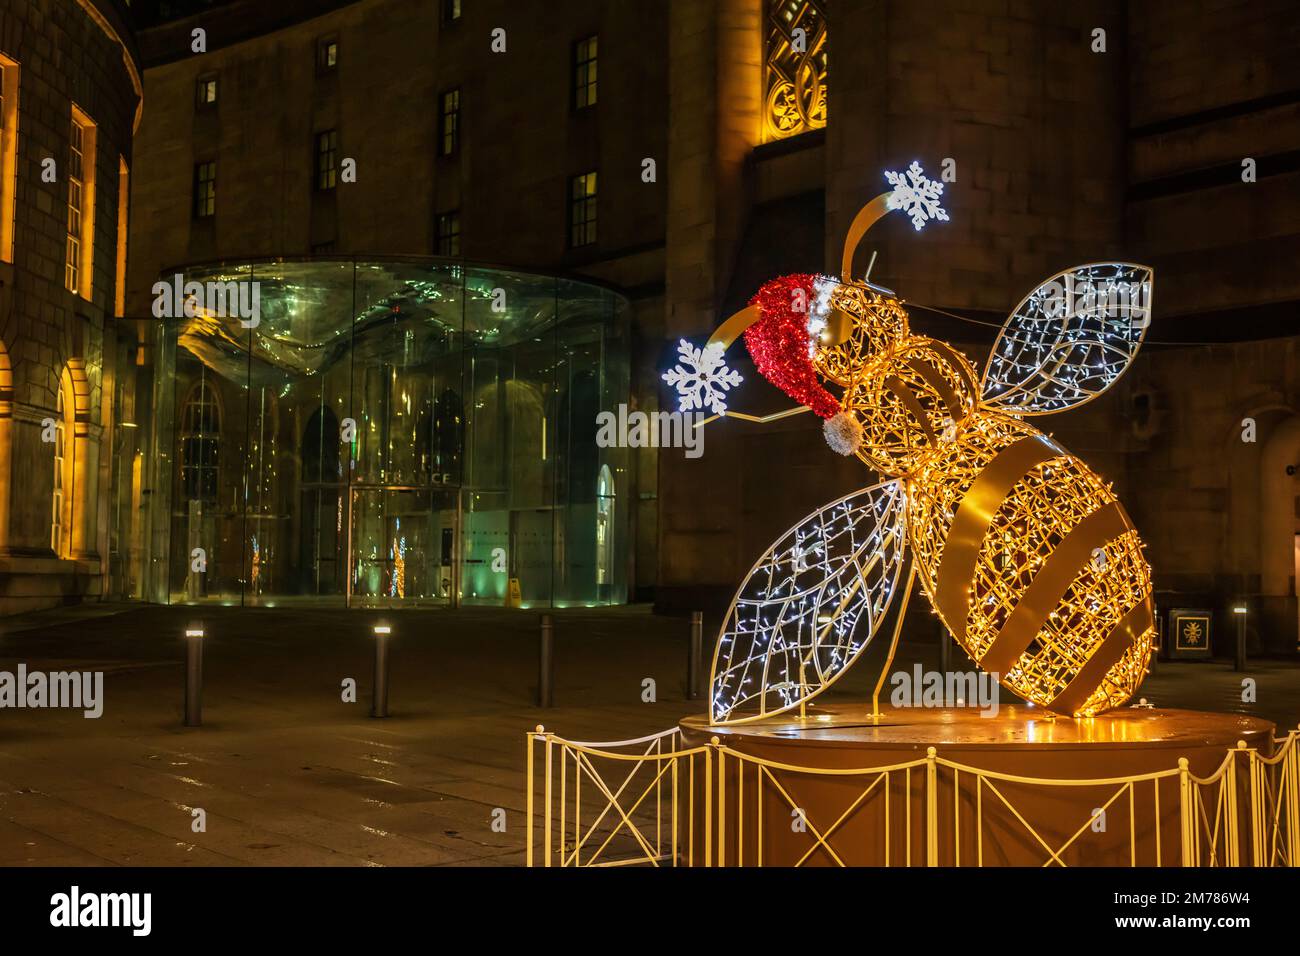 Christmas street decoration illuminated sculpture of a bee, symbol of Manchester, UK. Stock Photo